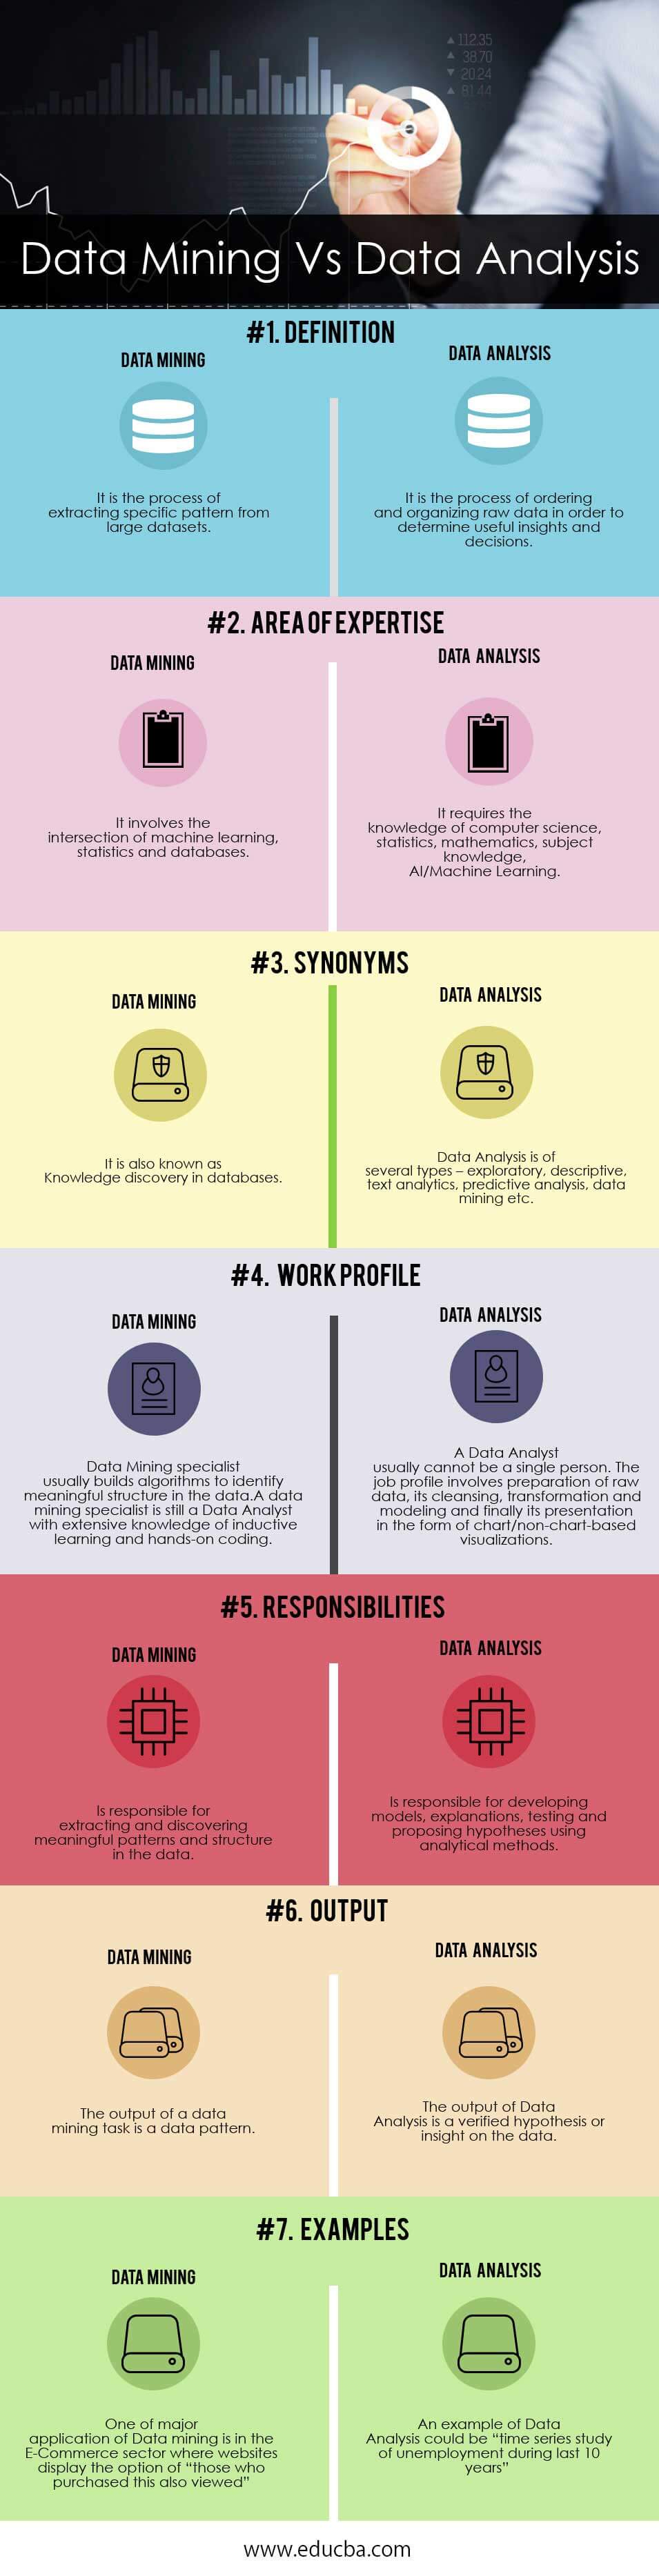 Data Mining vs Data Analysis | Know Top 7 Amazing Comparisons